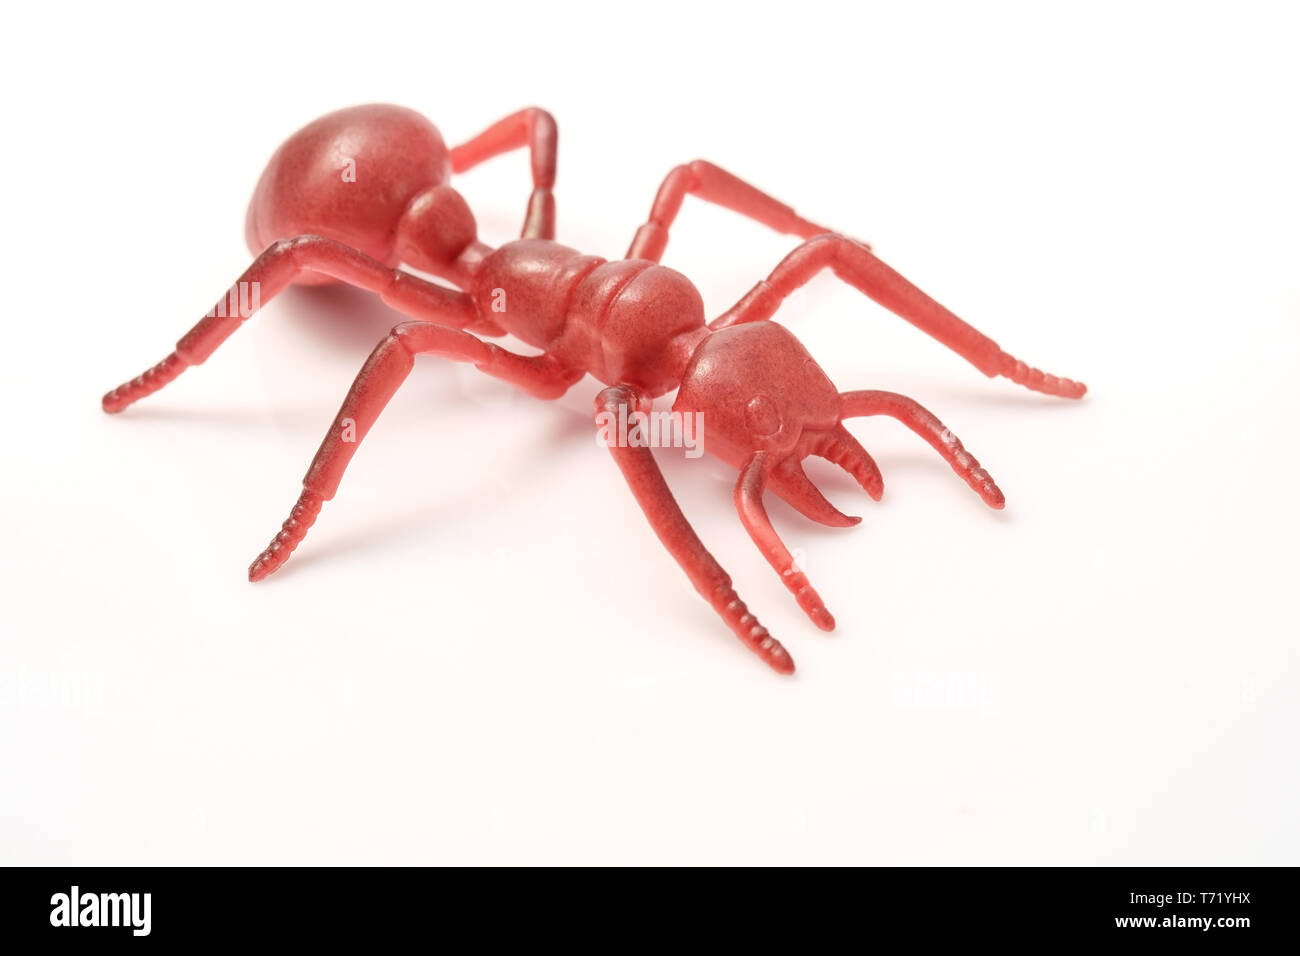 Toy ant on white background. Stock Photo